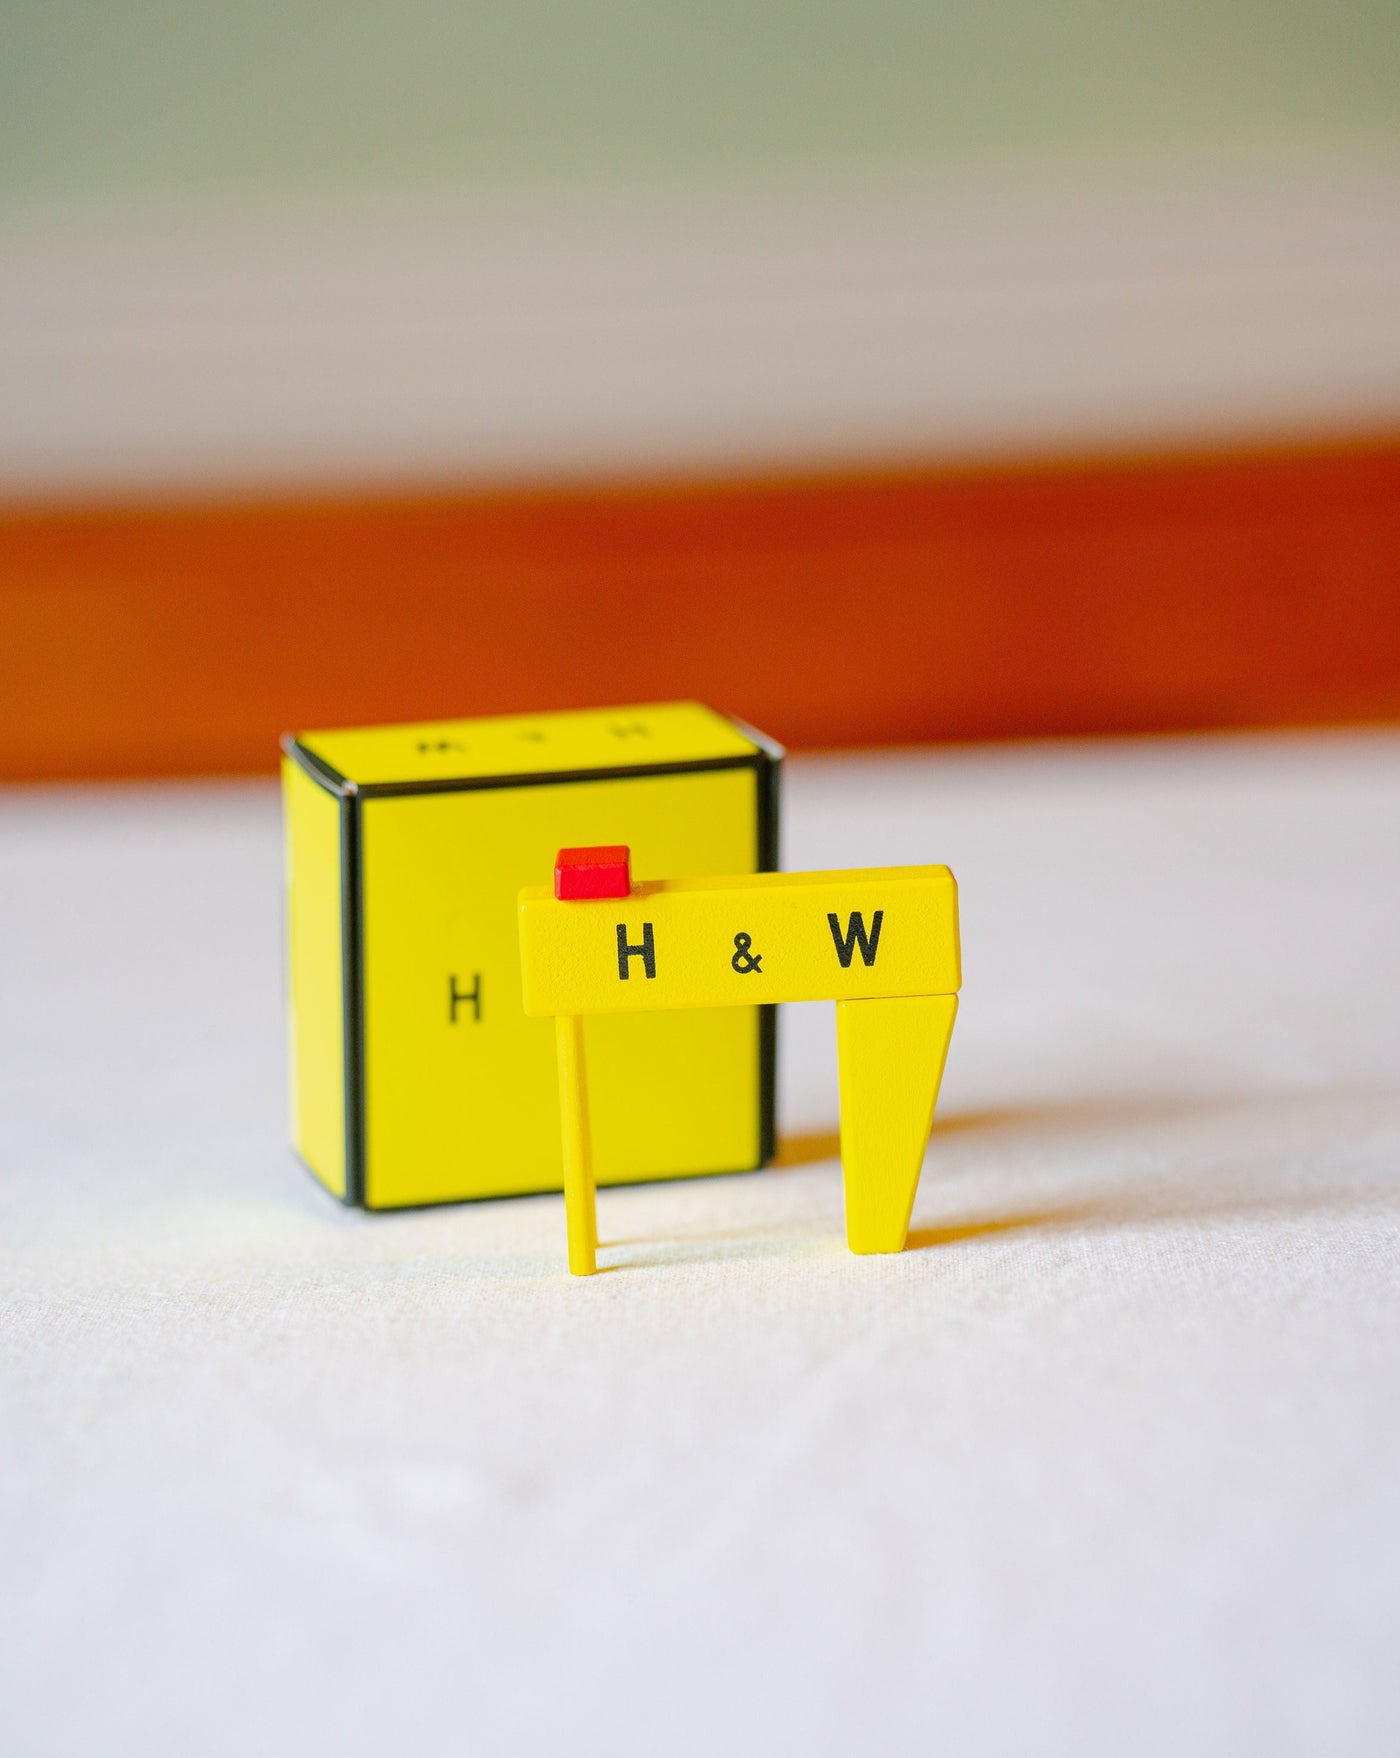 H & W wee crane model